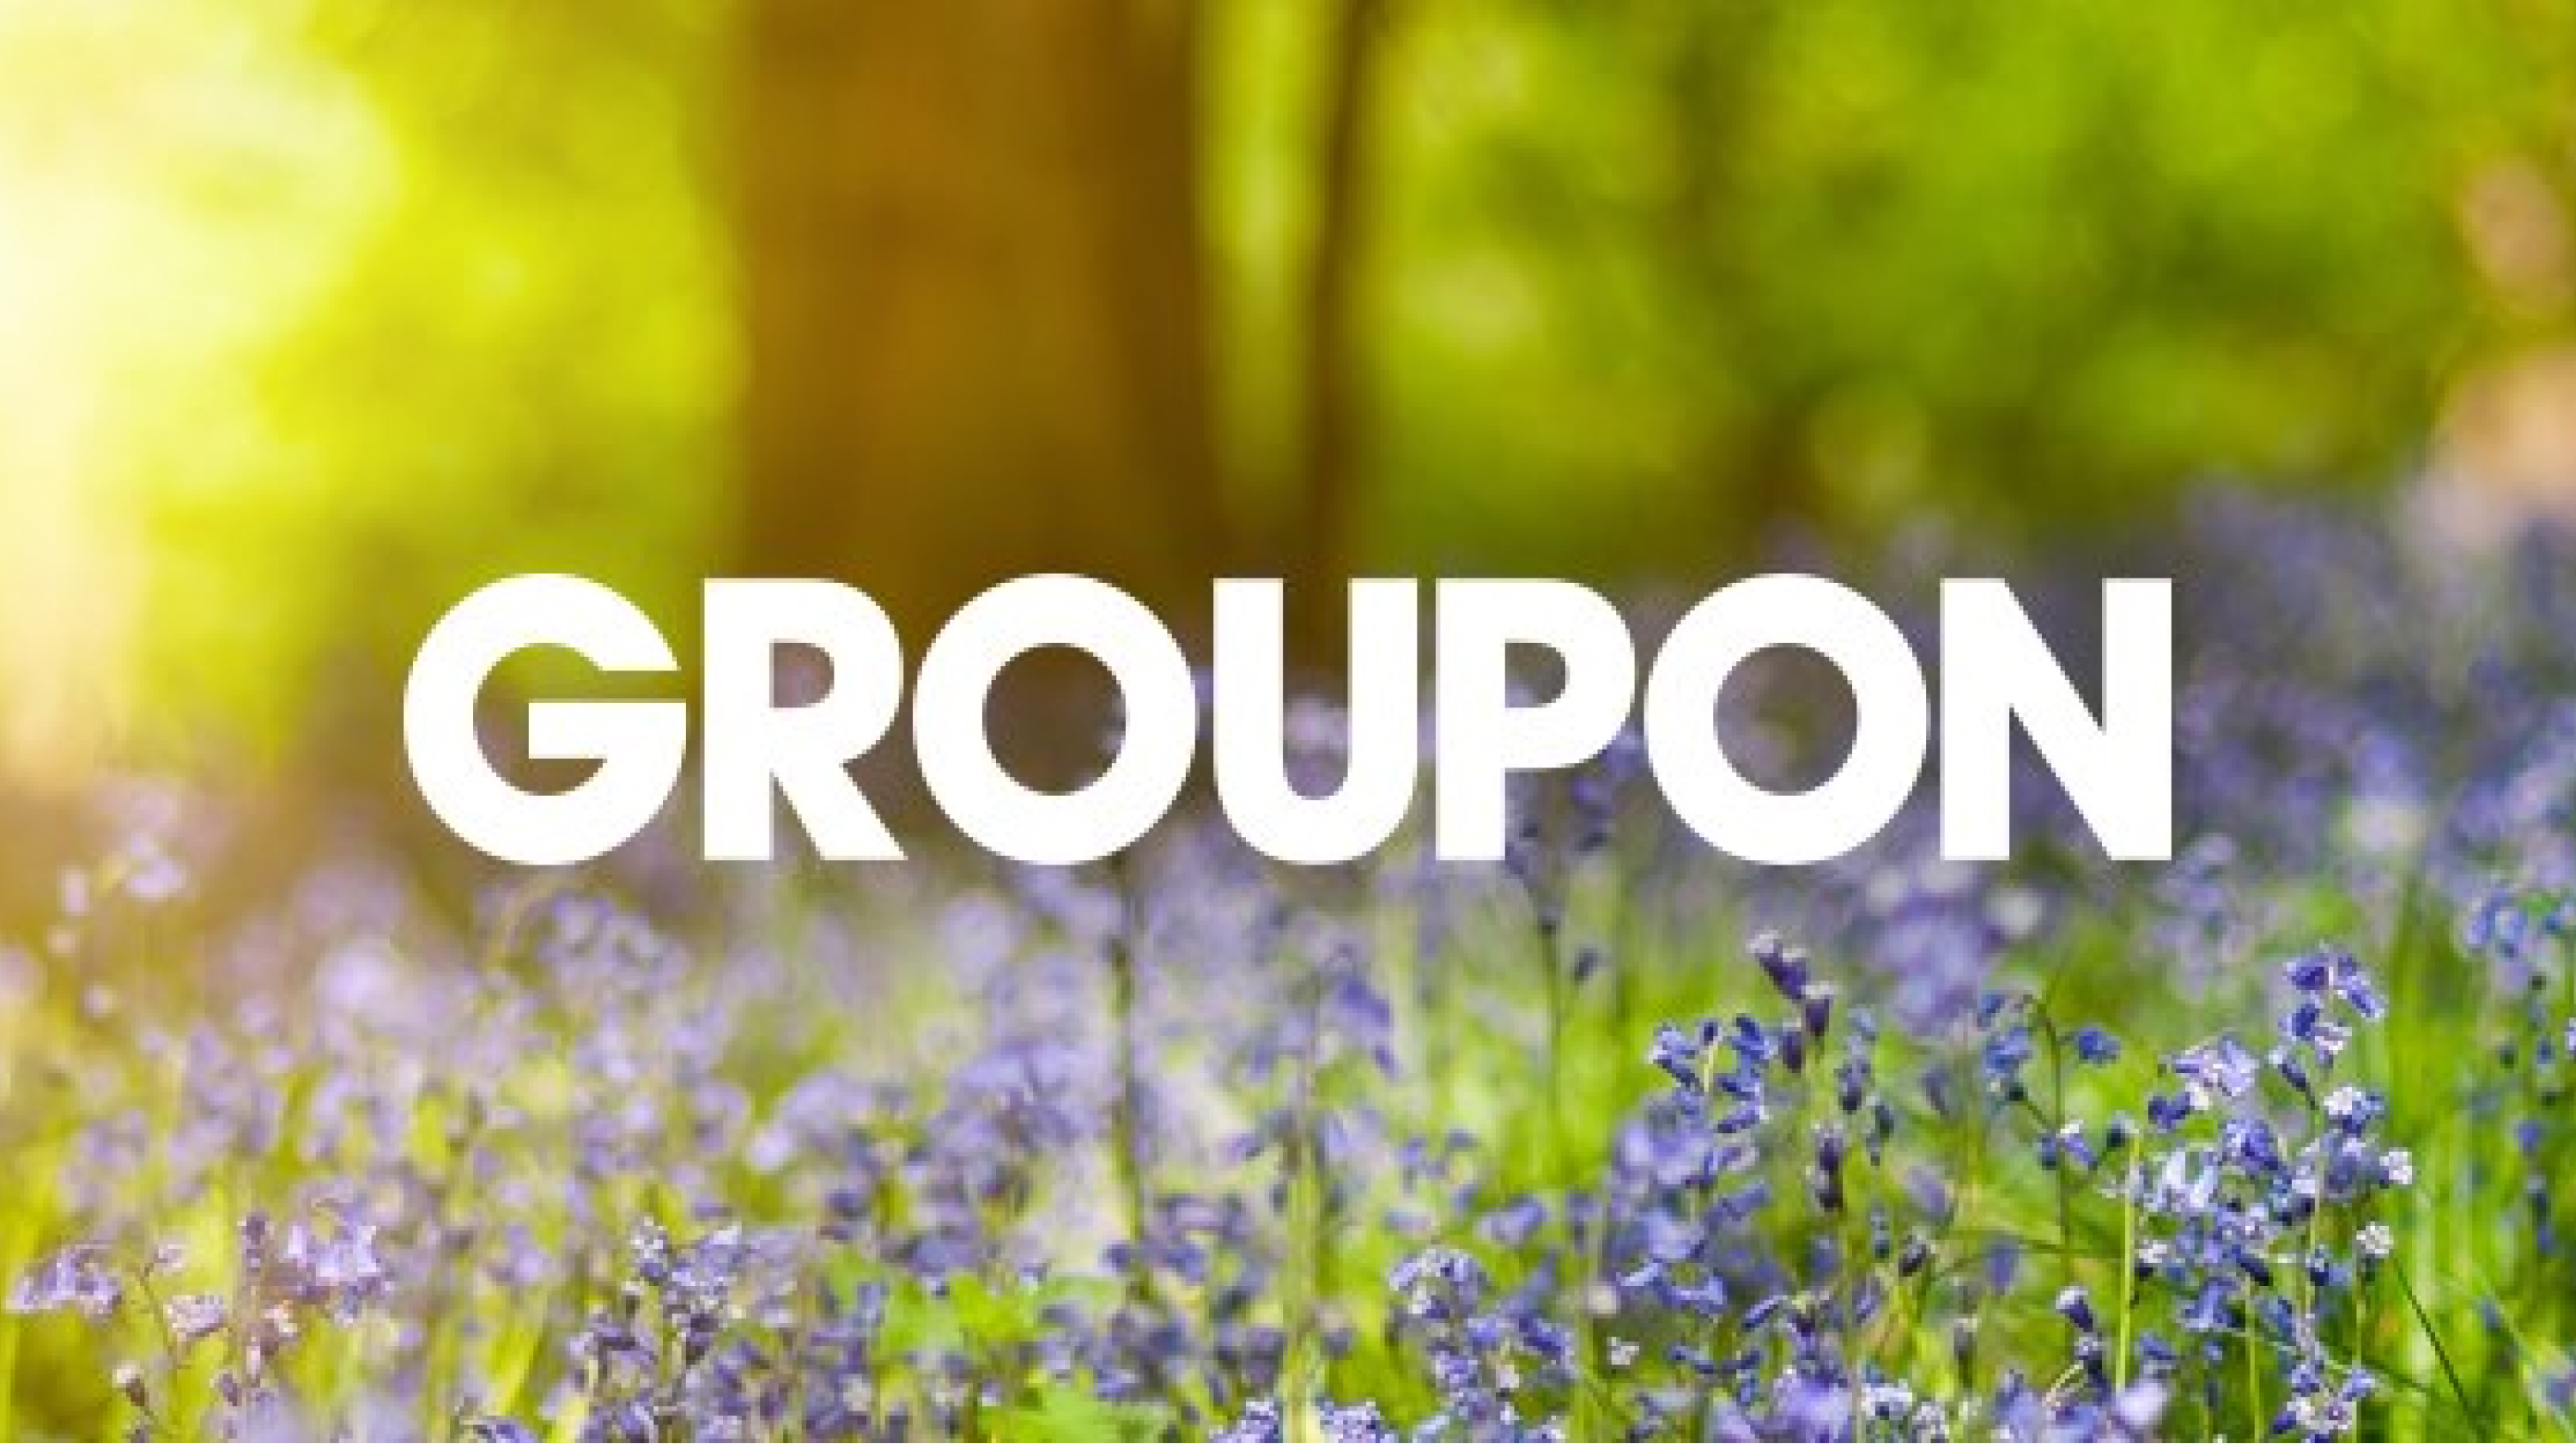 Groupon Discount Code ⇒ Get 30 Off, August 2021 19 Deals hotukdeals